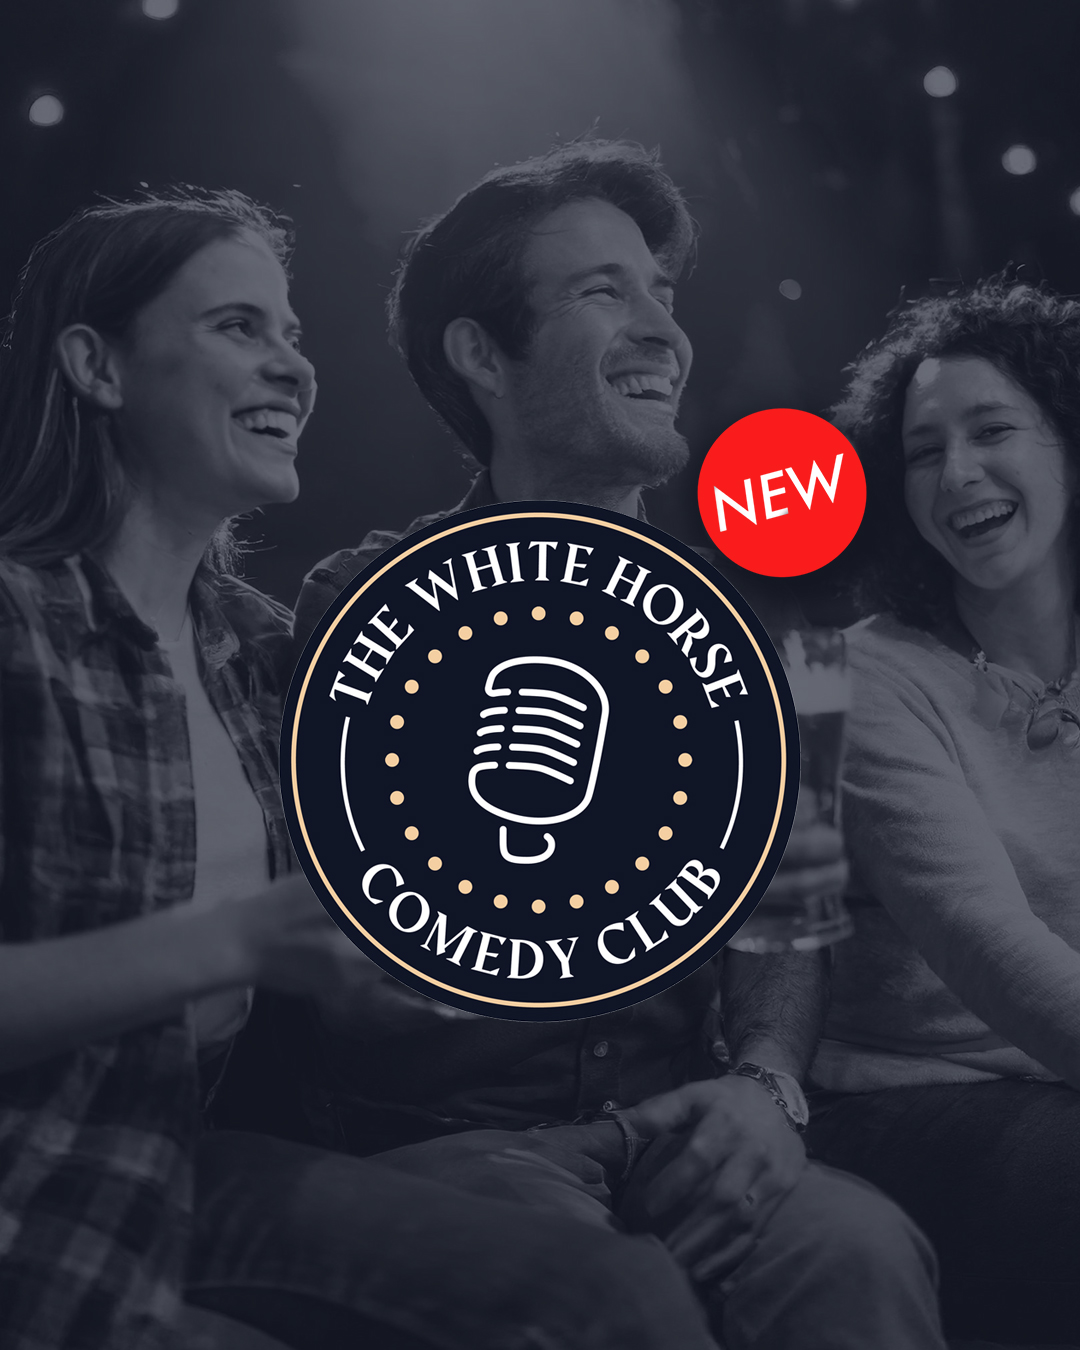 The White Horse Comedy Club